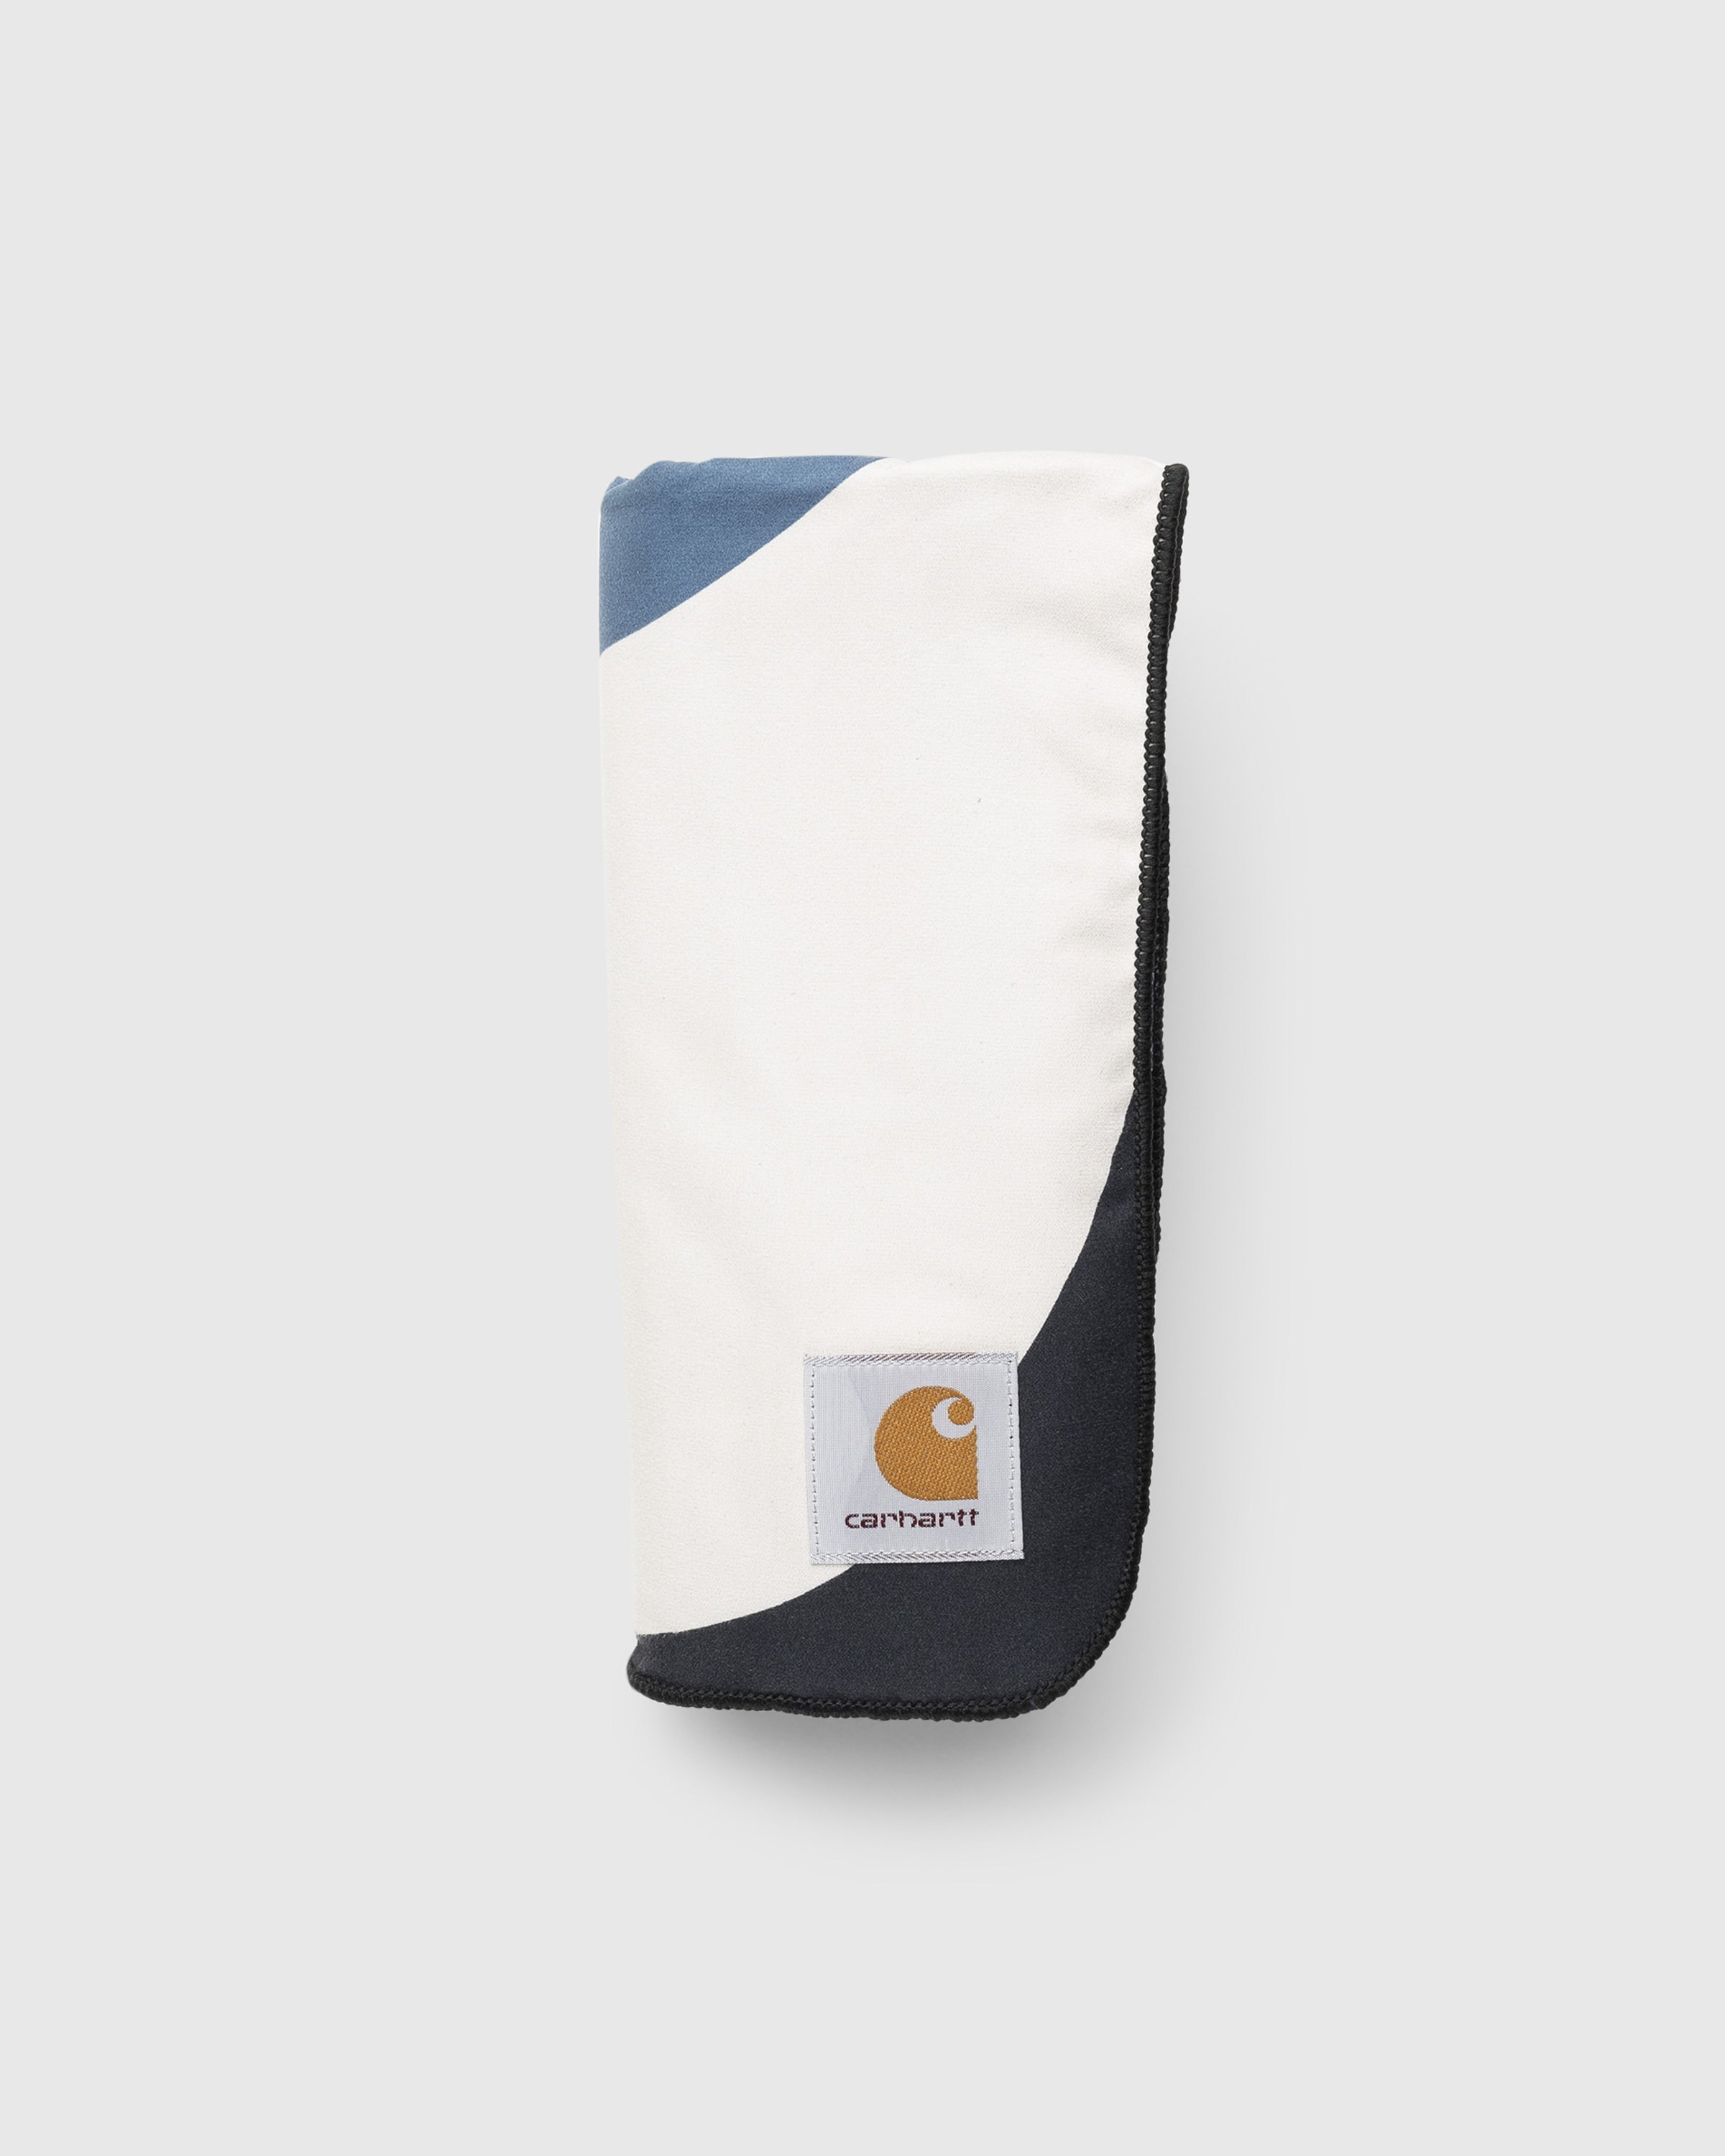 Carhartt WIP - Tamas Packable Towel Multi - Lifestyle - Multi - Image 3